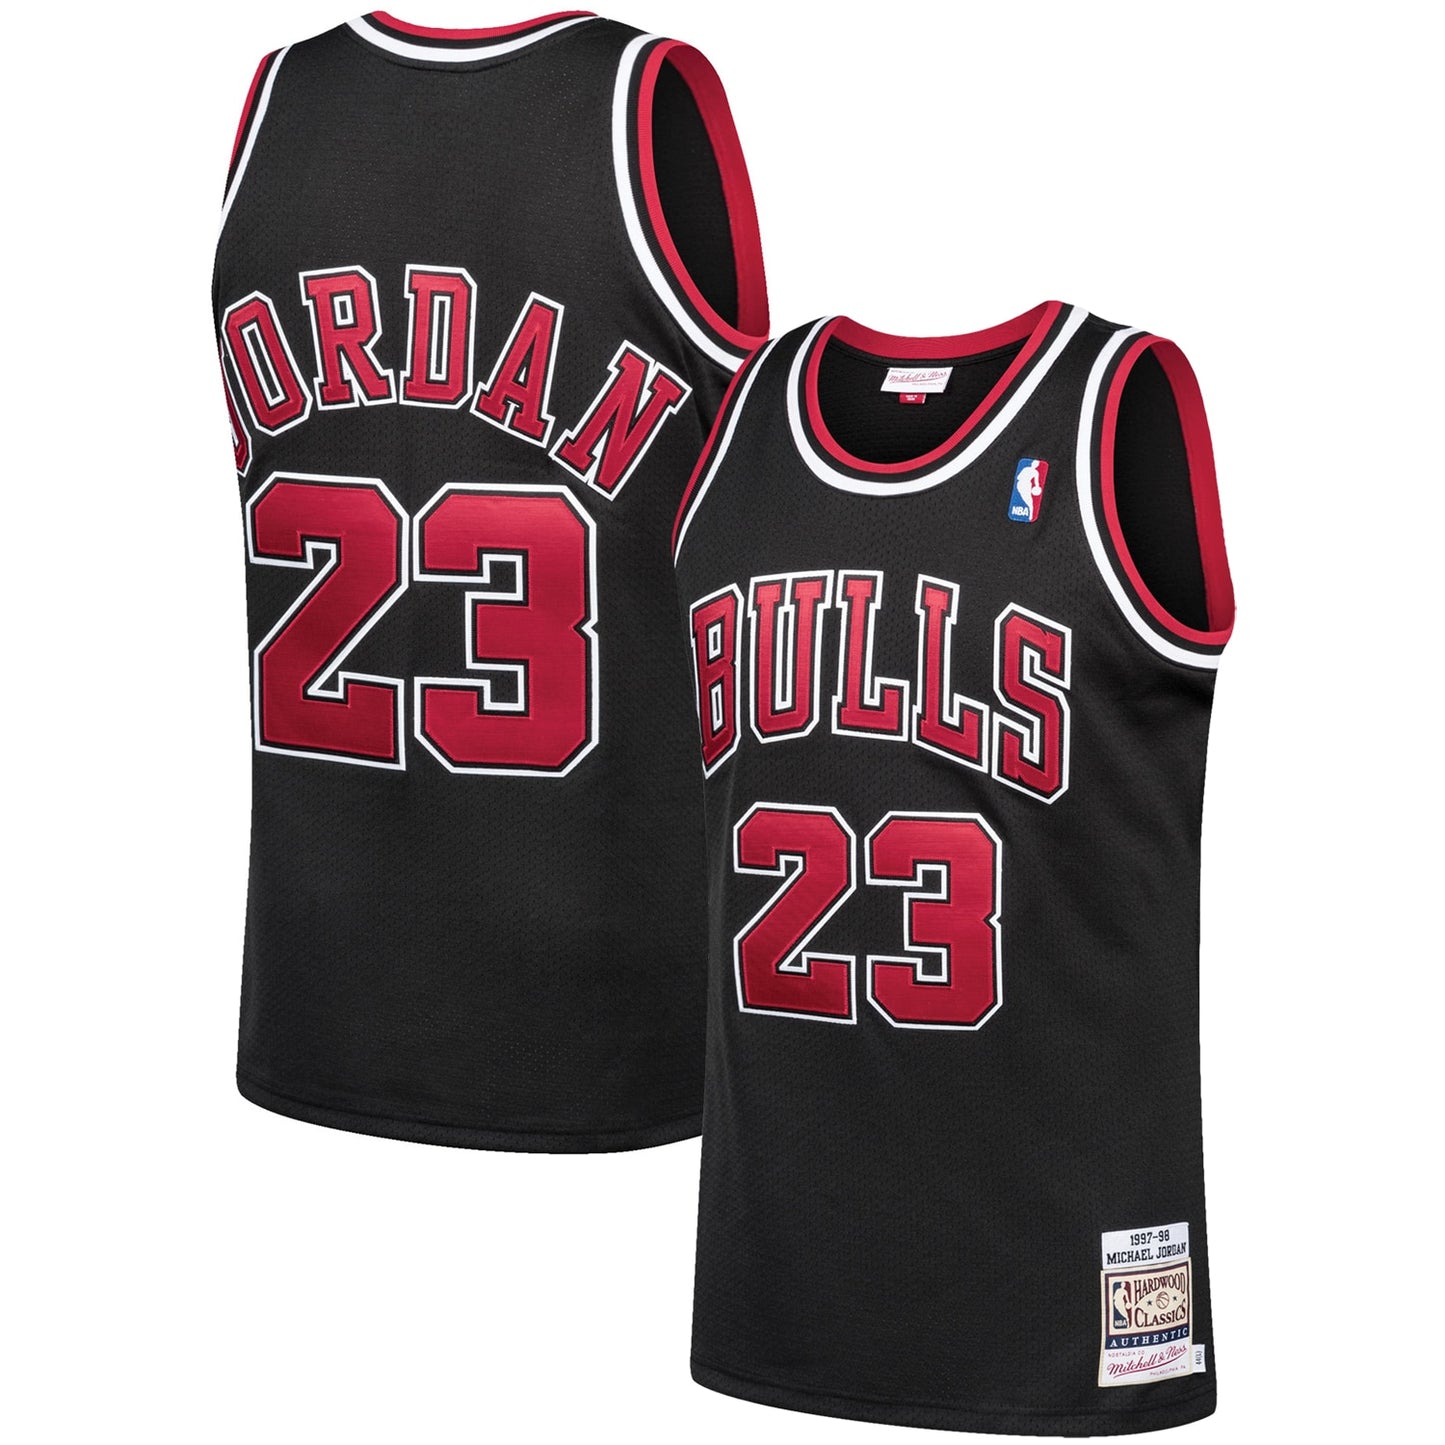 Michael Jordans Chicago Bulls Mitchell & Ness 1997-98 Hardwood Classics Authentic Player Jersey - Black